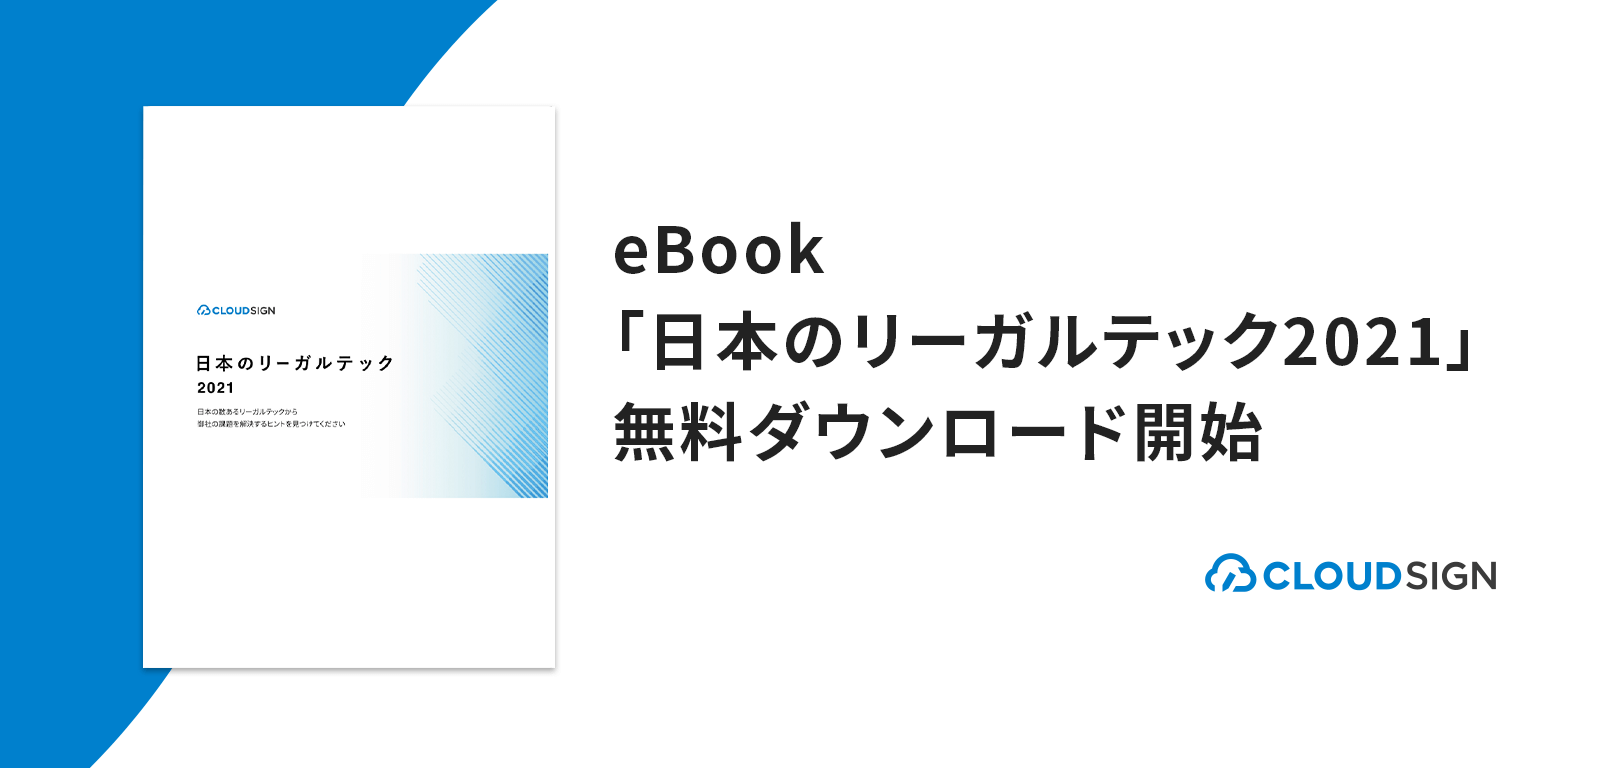 eBook「日本のリーガルテック2021」無料ダウンロード開始